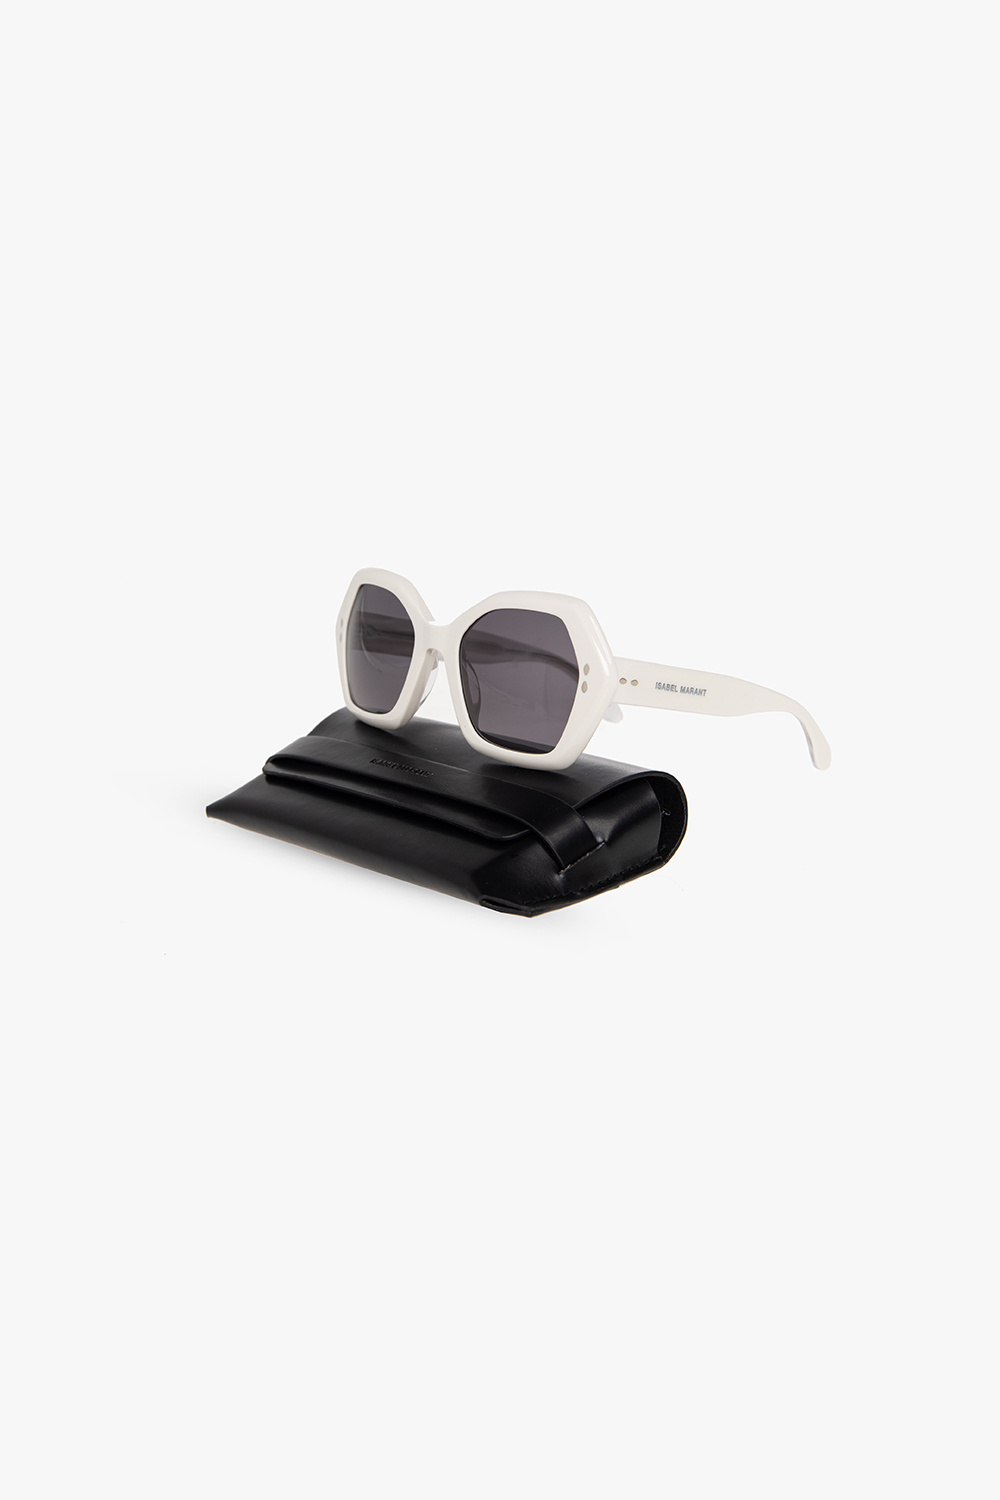 Isabel Marant ‘Ely’ sunglasses